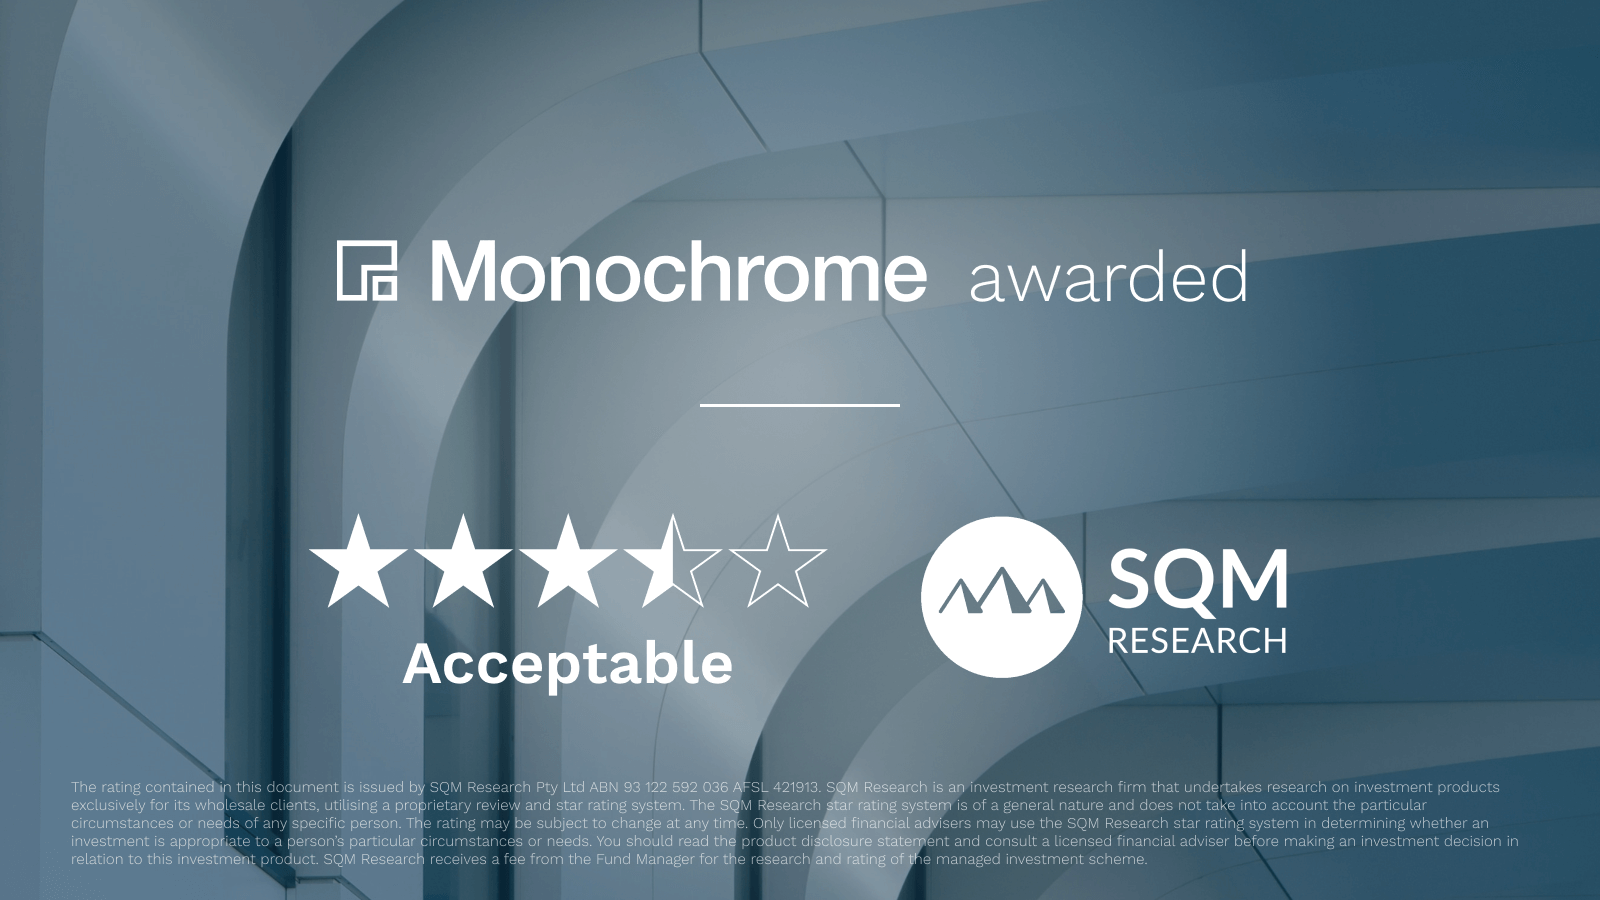 SQM-Monochrome-Rating_1600x900 (2)-min.png